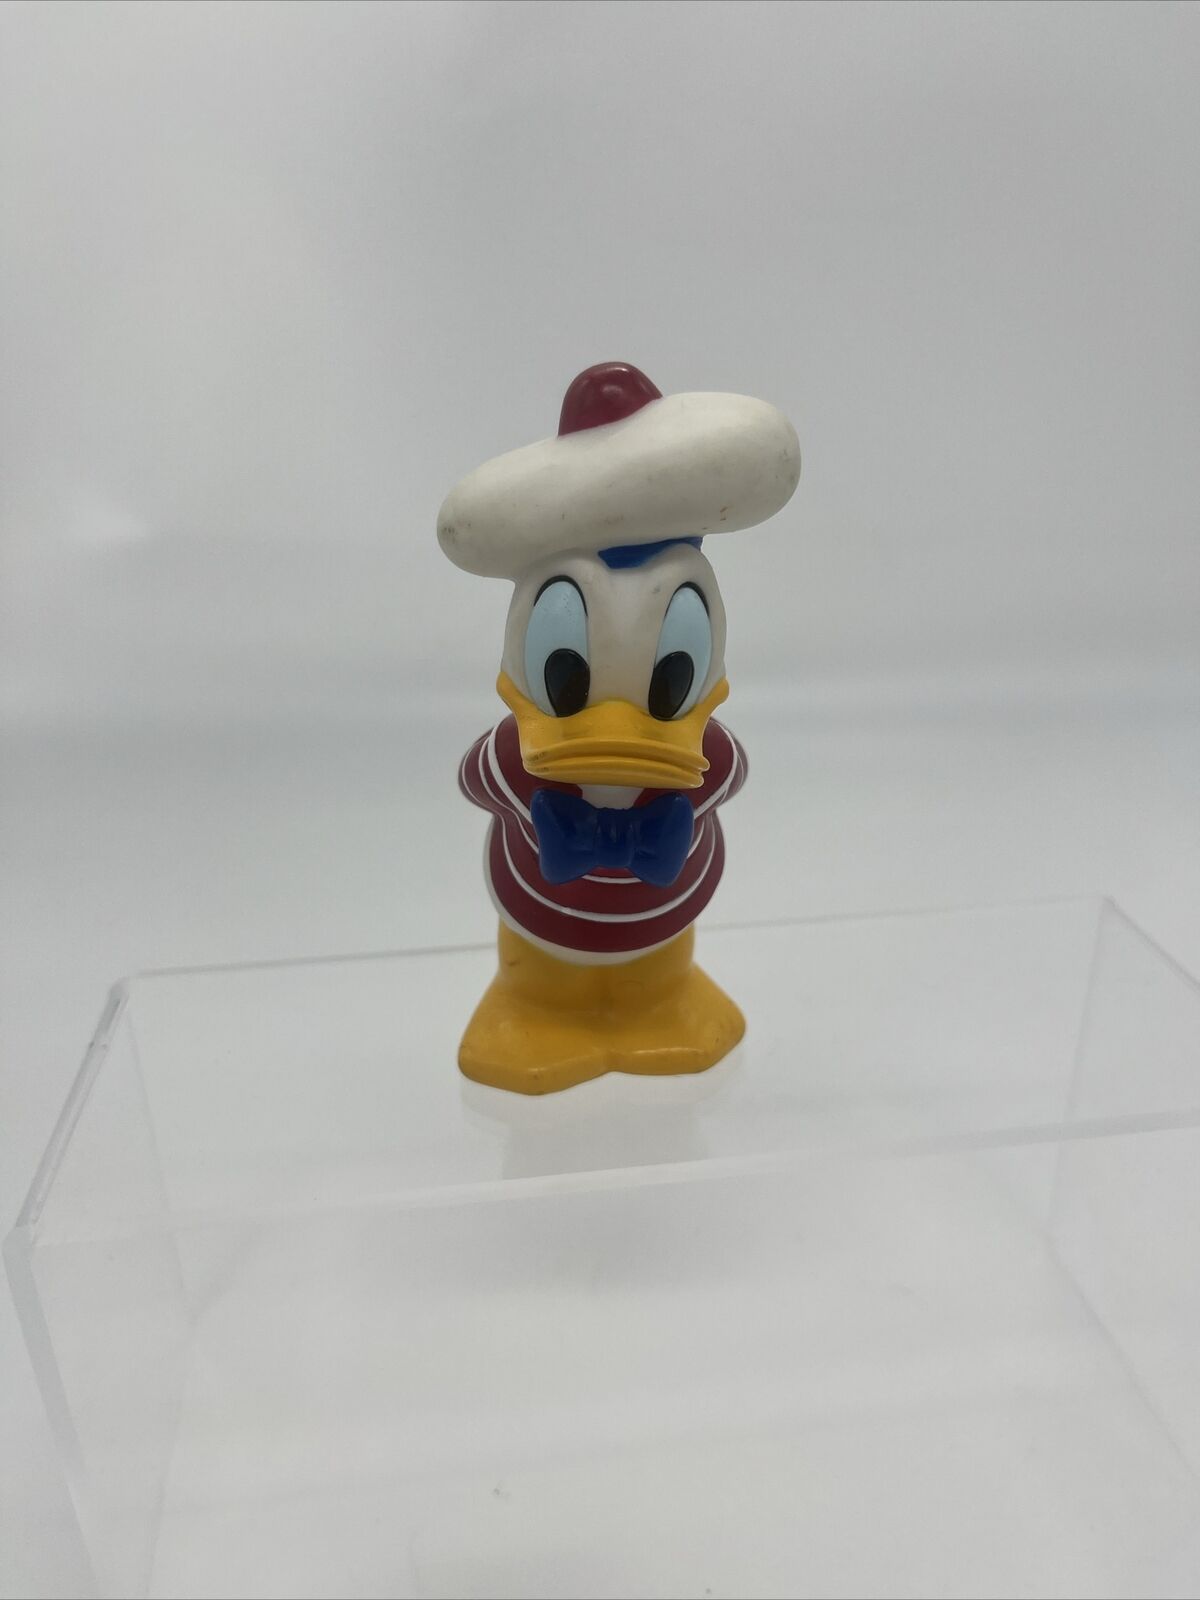 Vintage 1990’s Disney’s Donald Duck 4” Vinyl Toy Figure